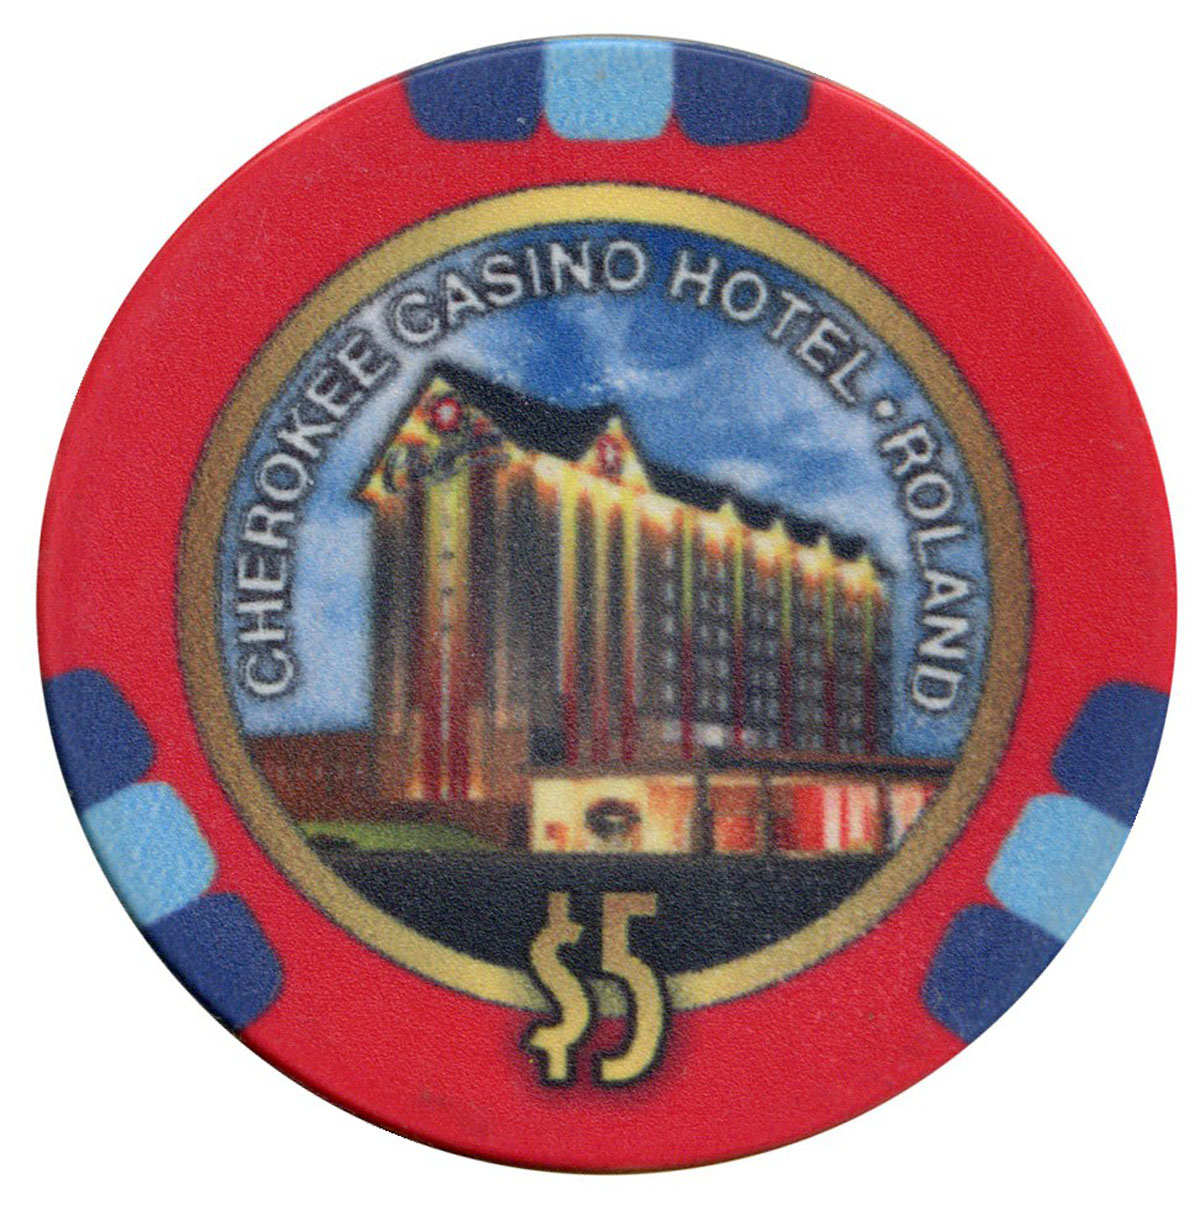 cherokee casino roland payout